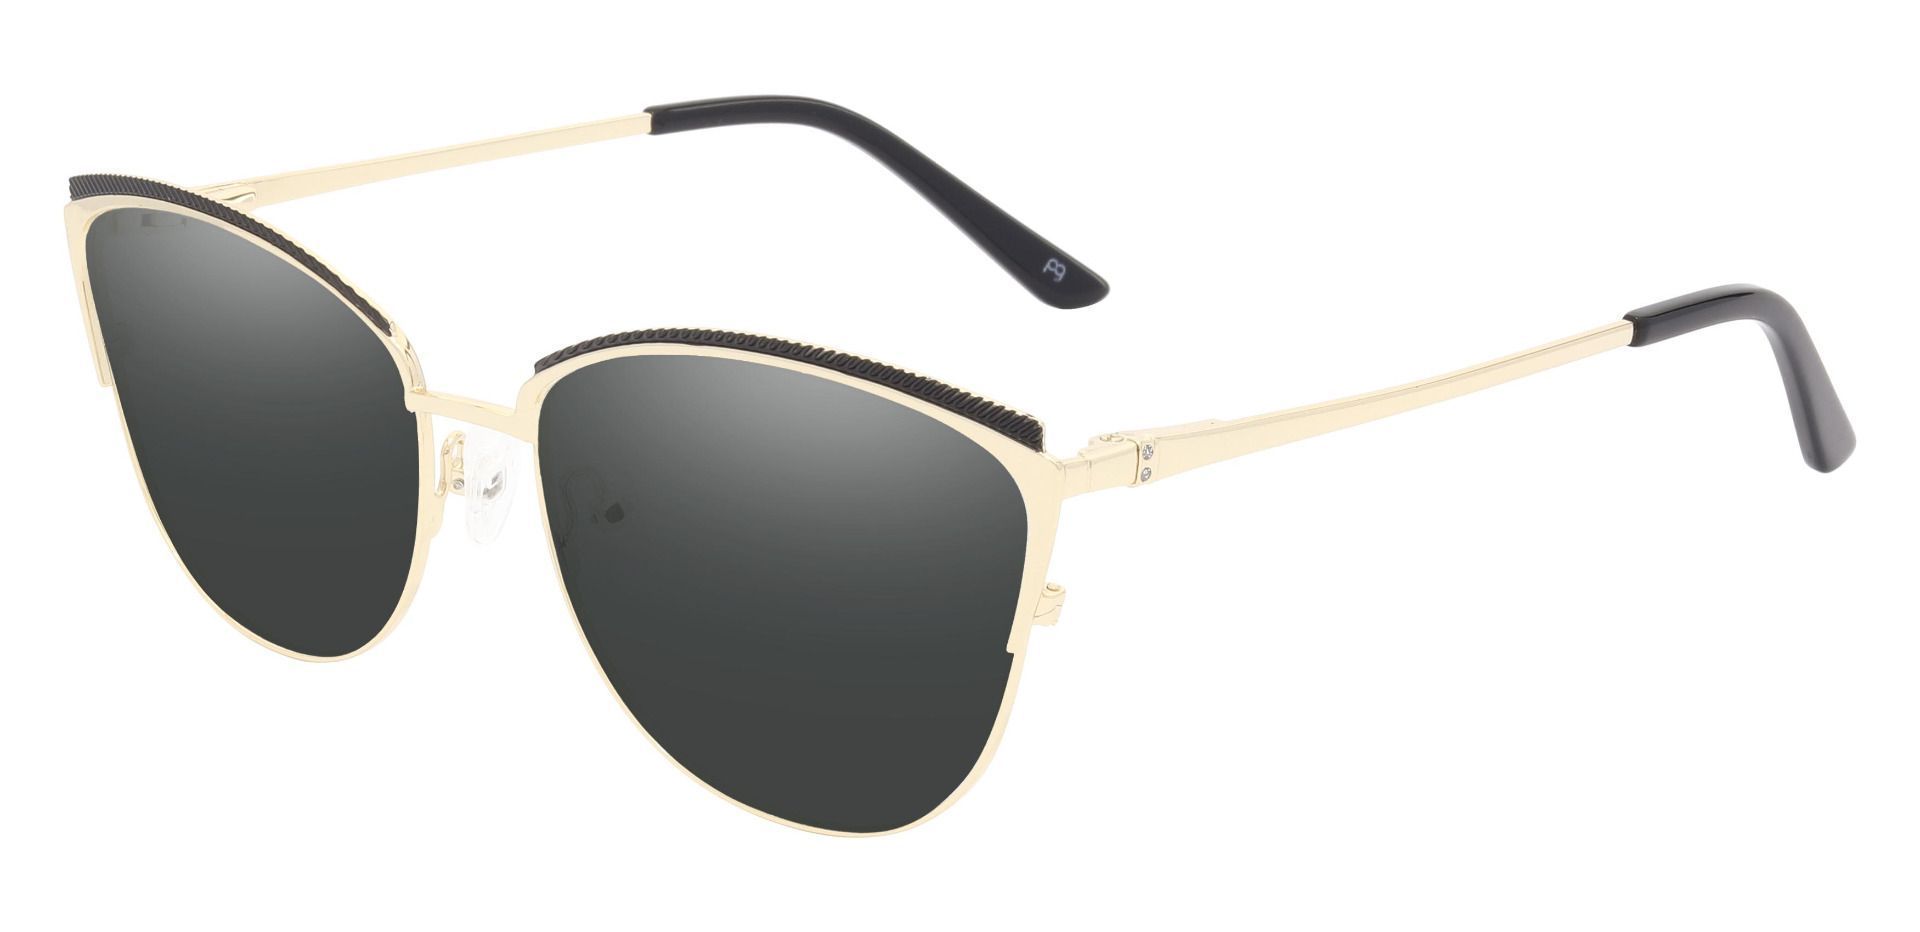 Magnolia Cat Eye Prescription Sunglasses - Gold Frame With Gray Lenses